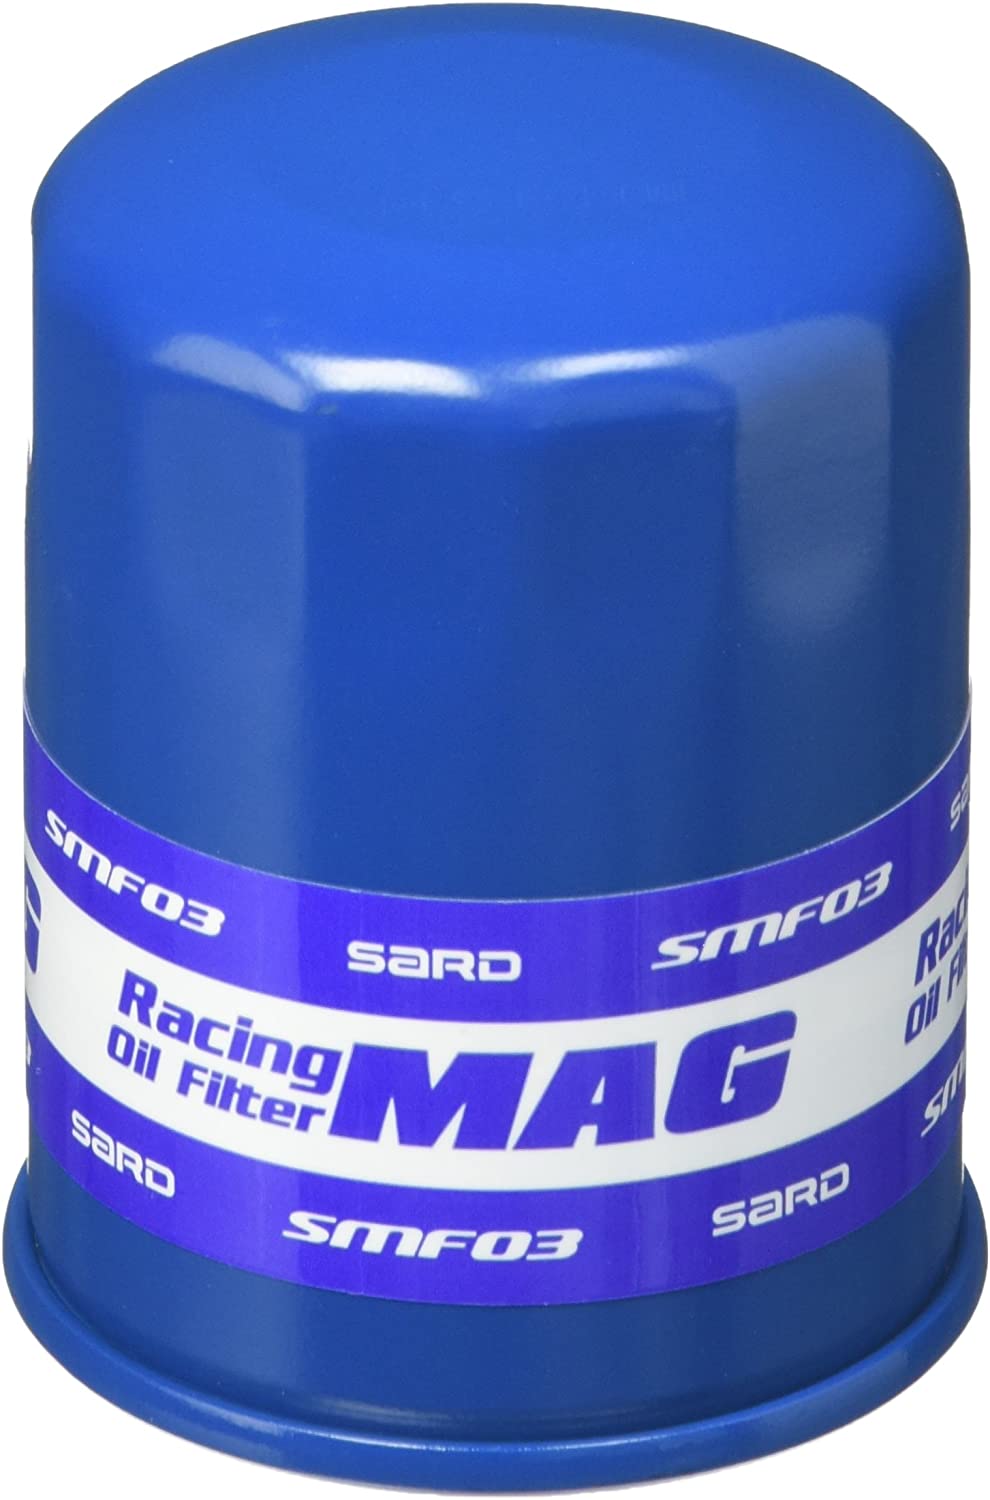 SARD RACING OIL FILTER For HARRIER MCU10 MCU15 SMF04